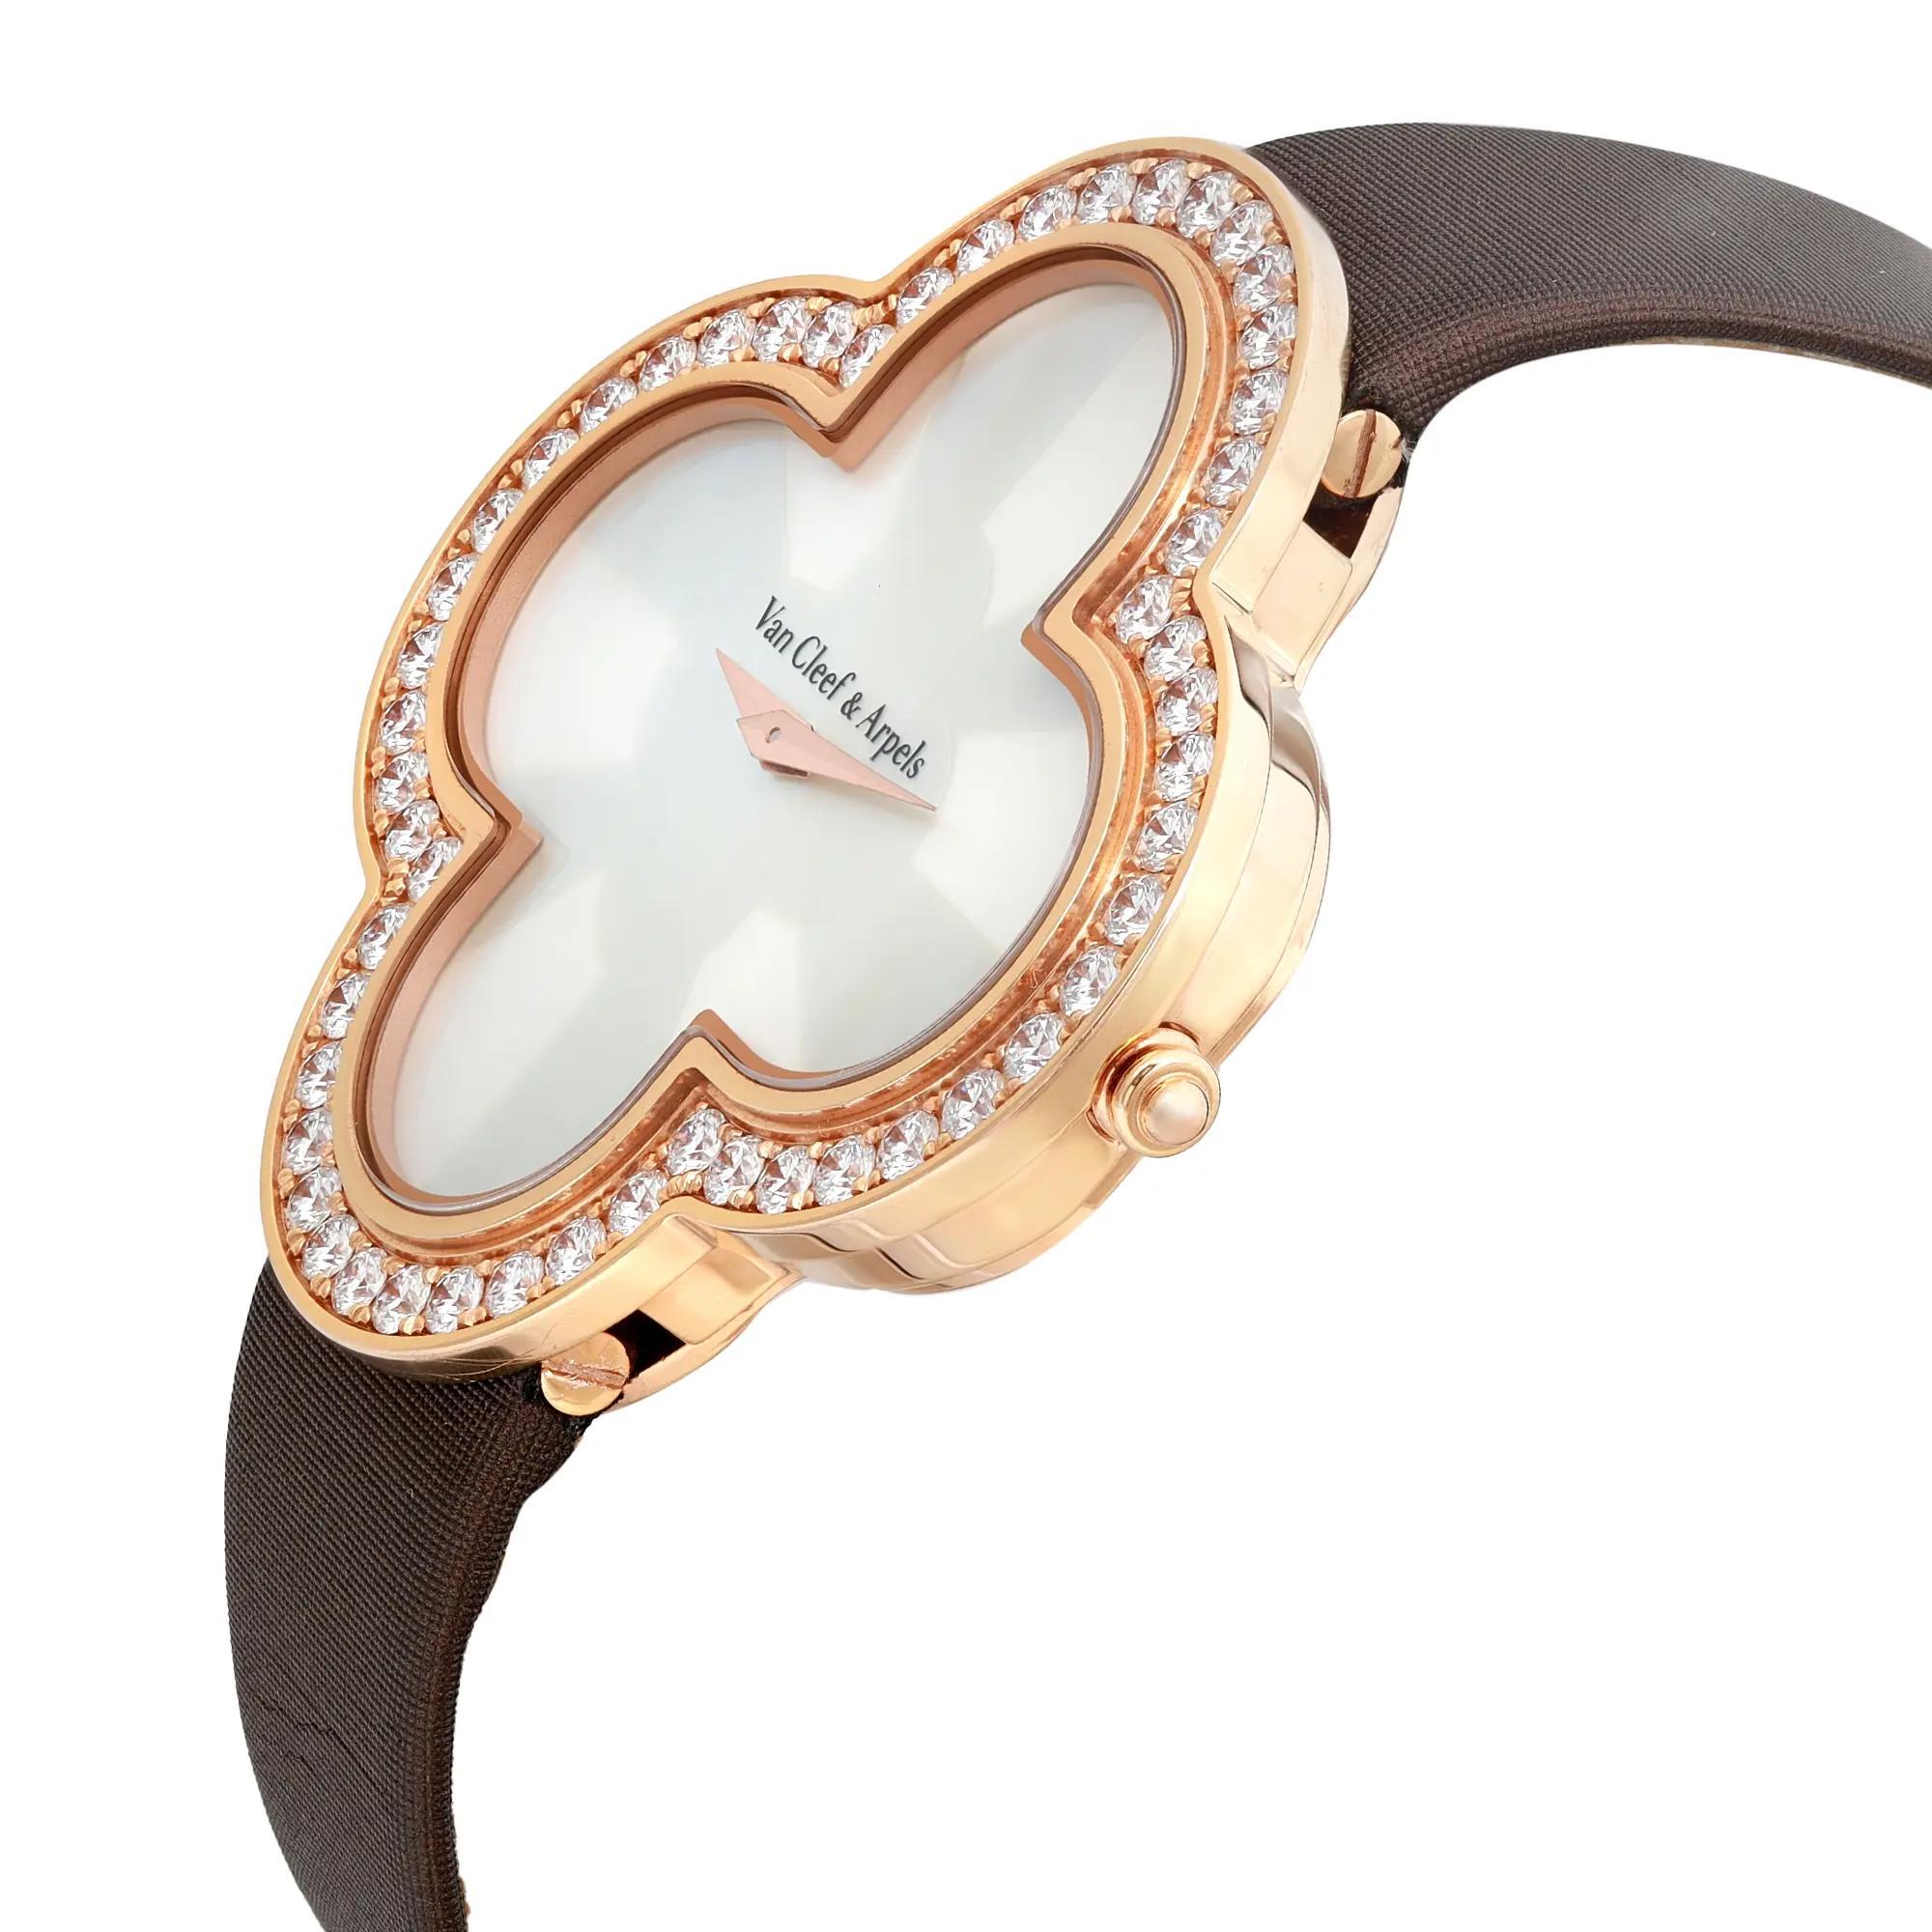 papillon watch price in saudi arabia